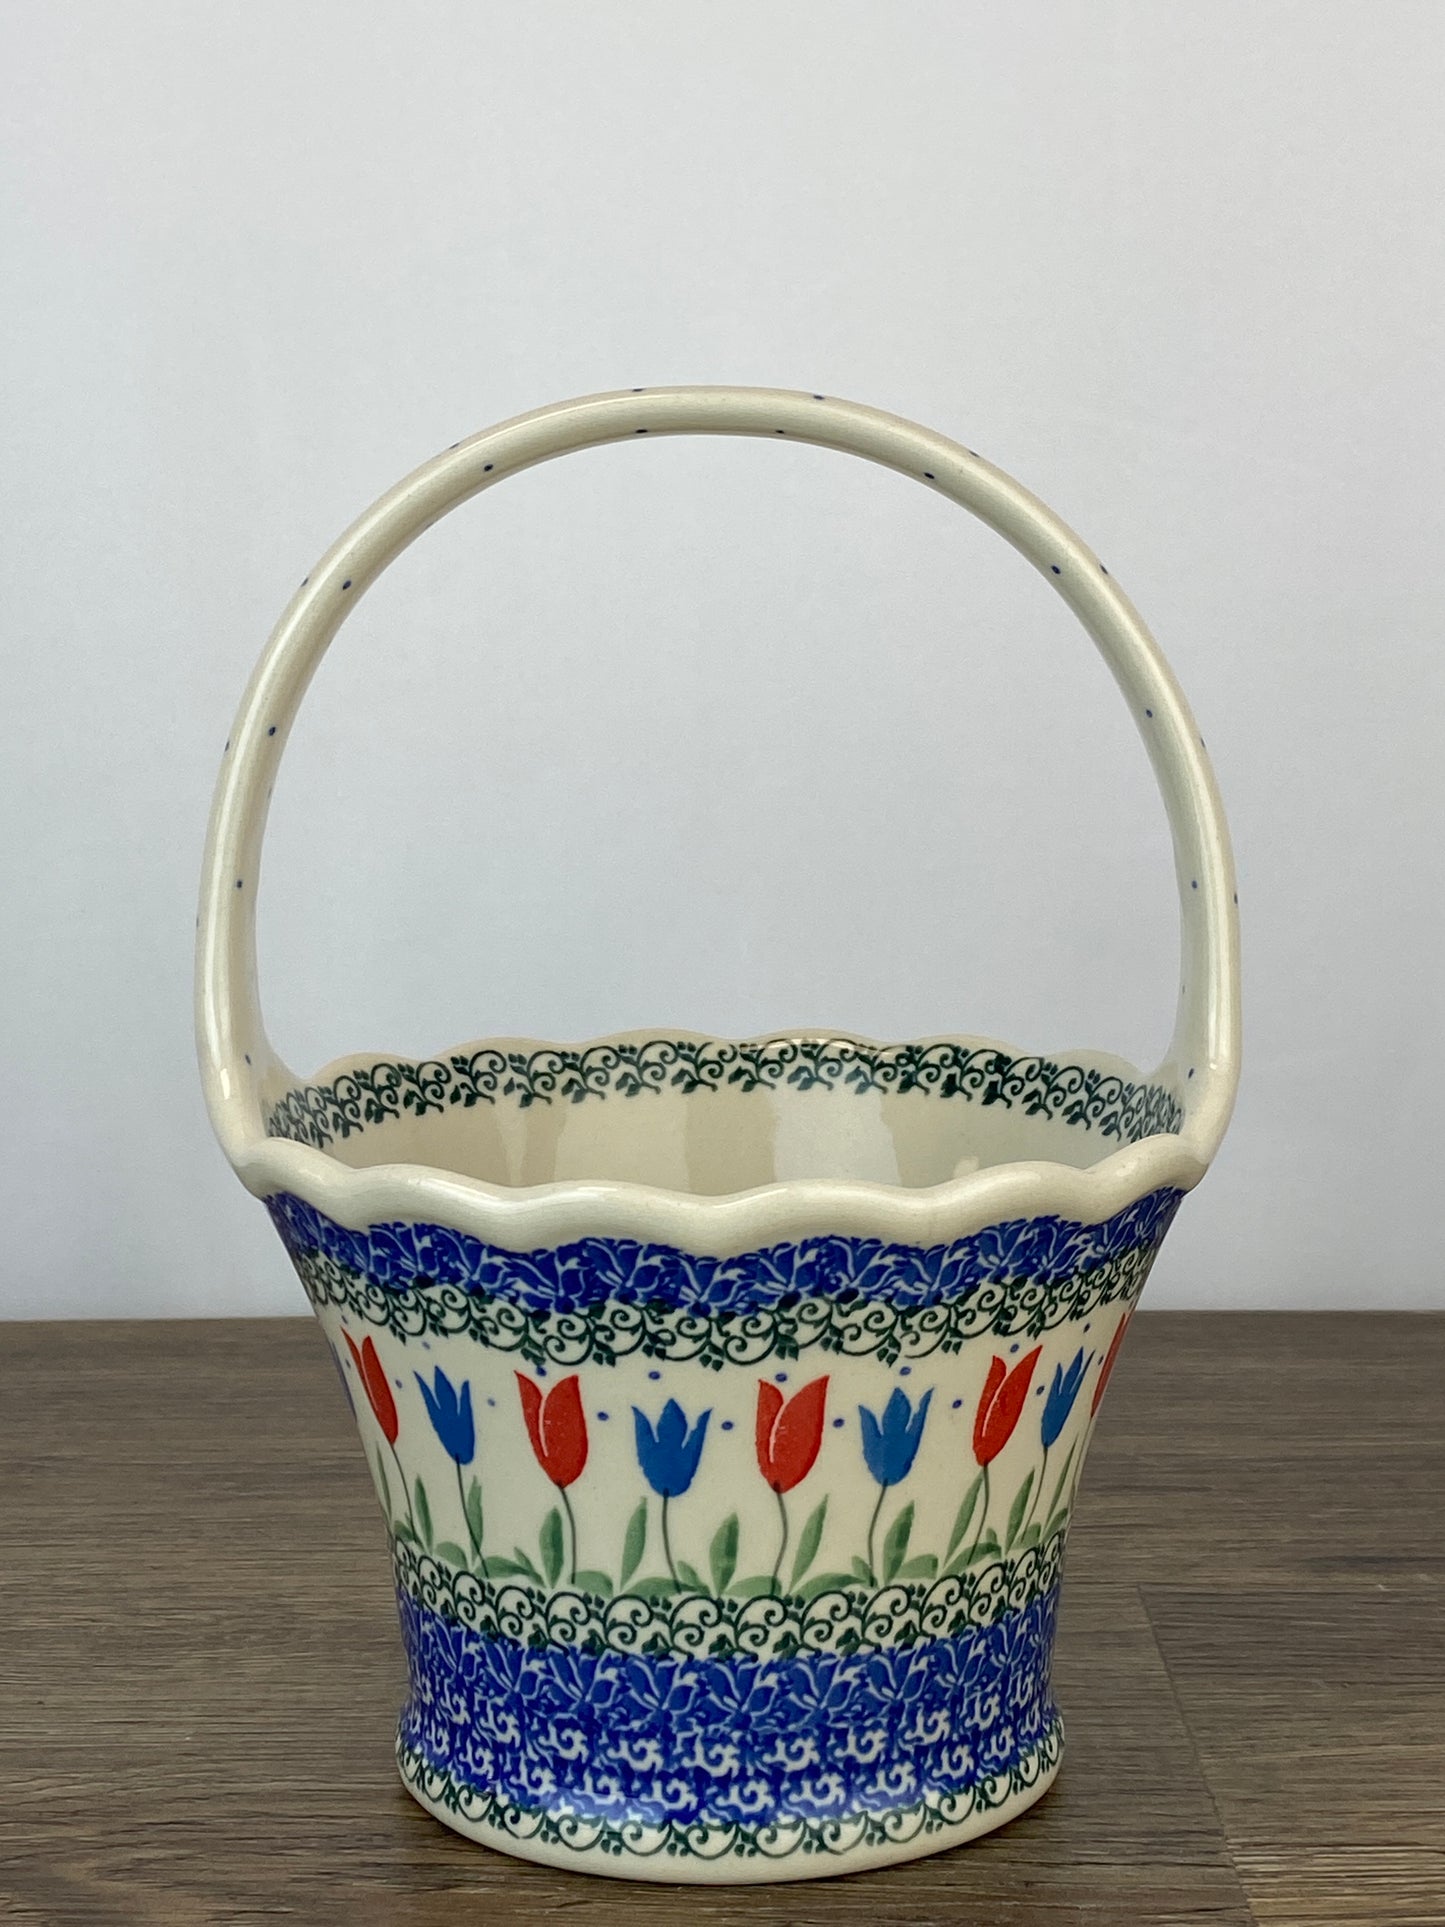 SALE Basket with Handle - Shape A31 - Pattern 2599